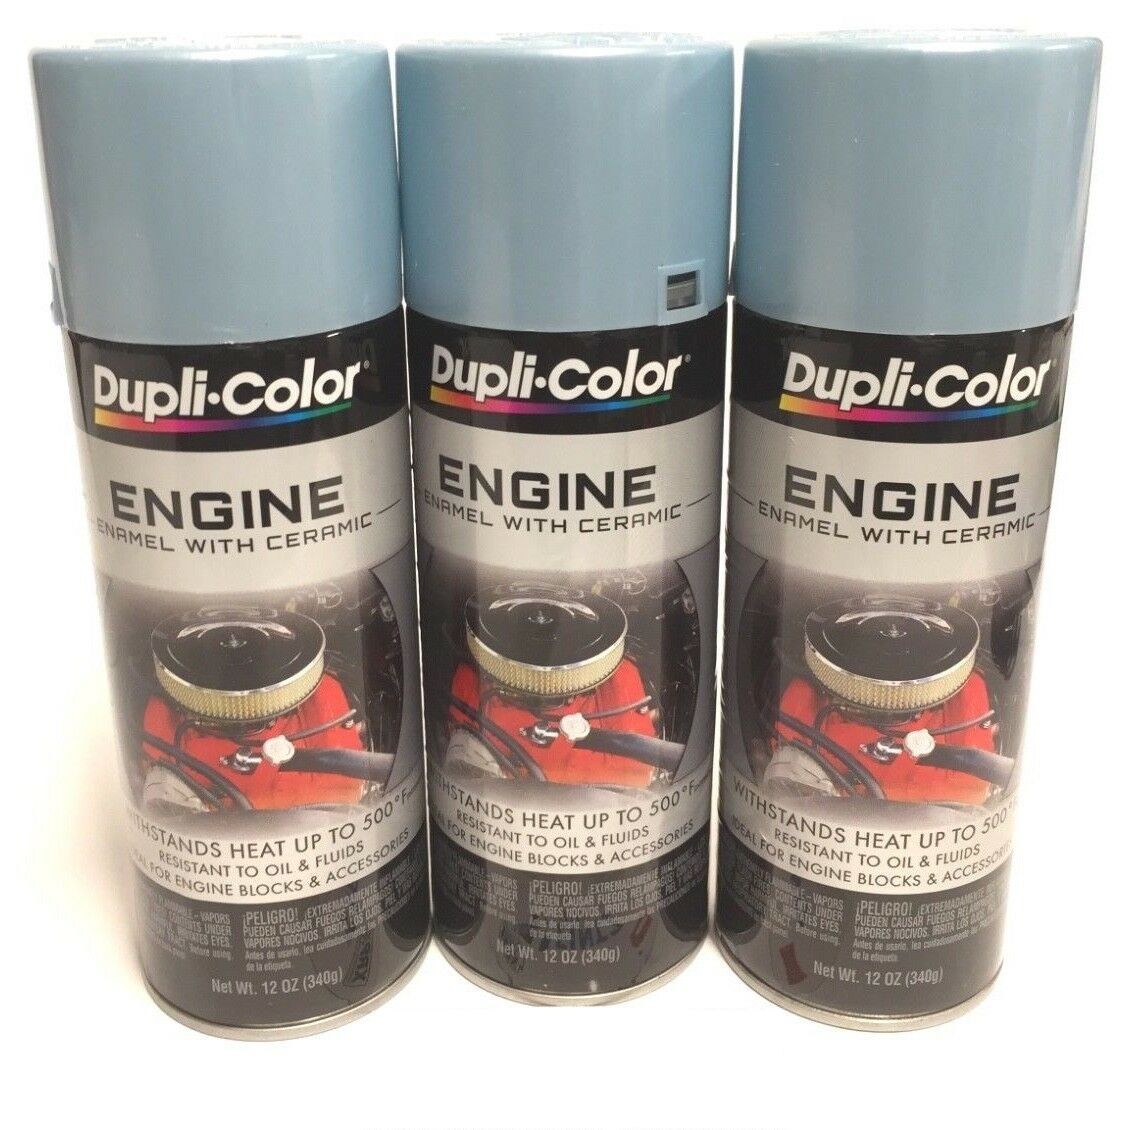 Duplicolor DE1616-3 Pack Engine Enamel with Ceramic Pontiac Blue Metallic Color - 12 oz